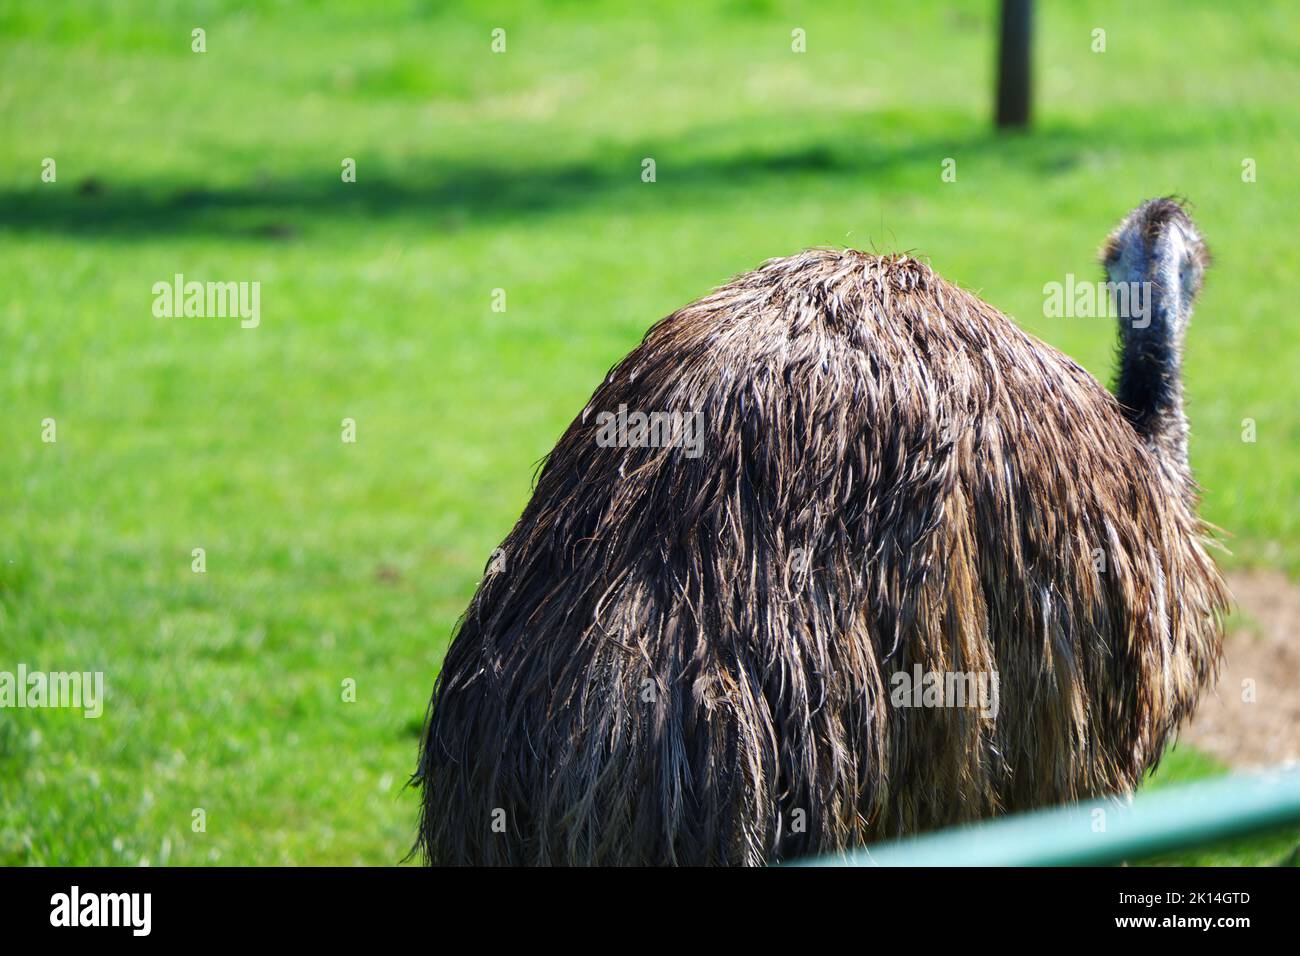 Emu on grass Stock Photo